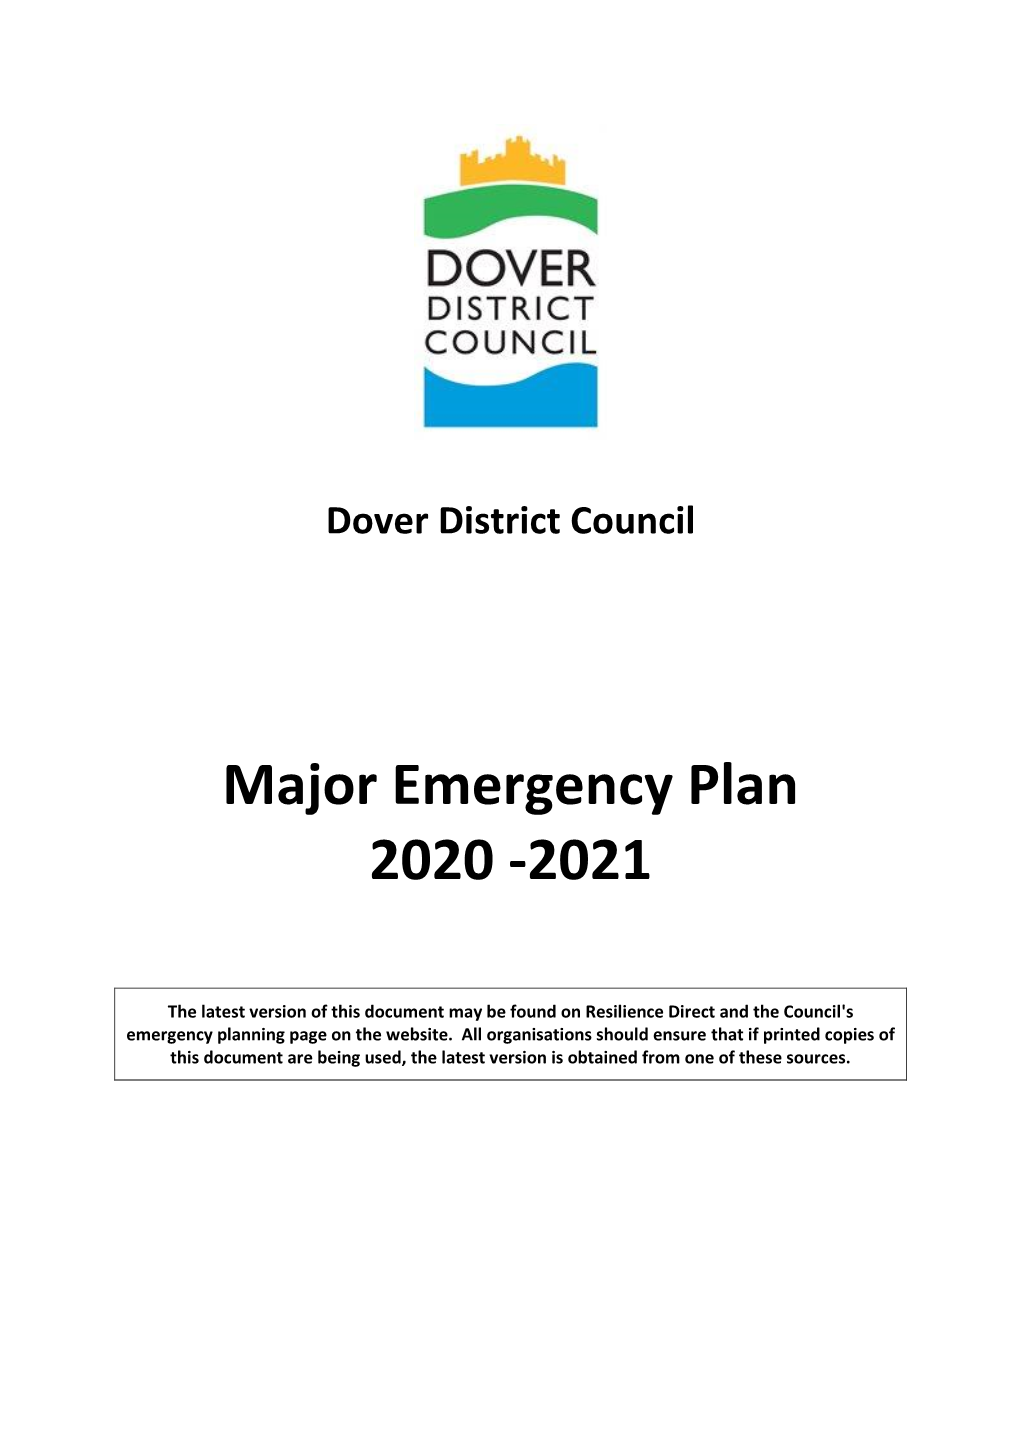 Major Emergency Plan 2020 -2021